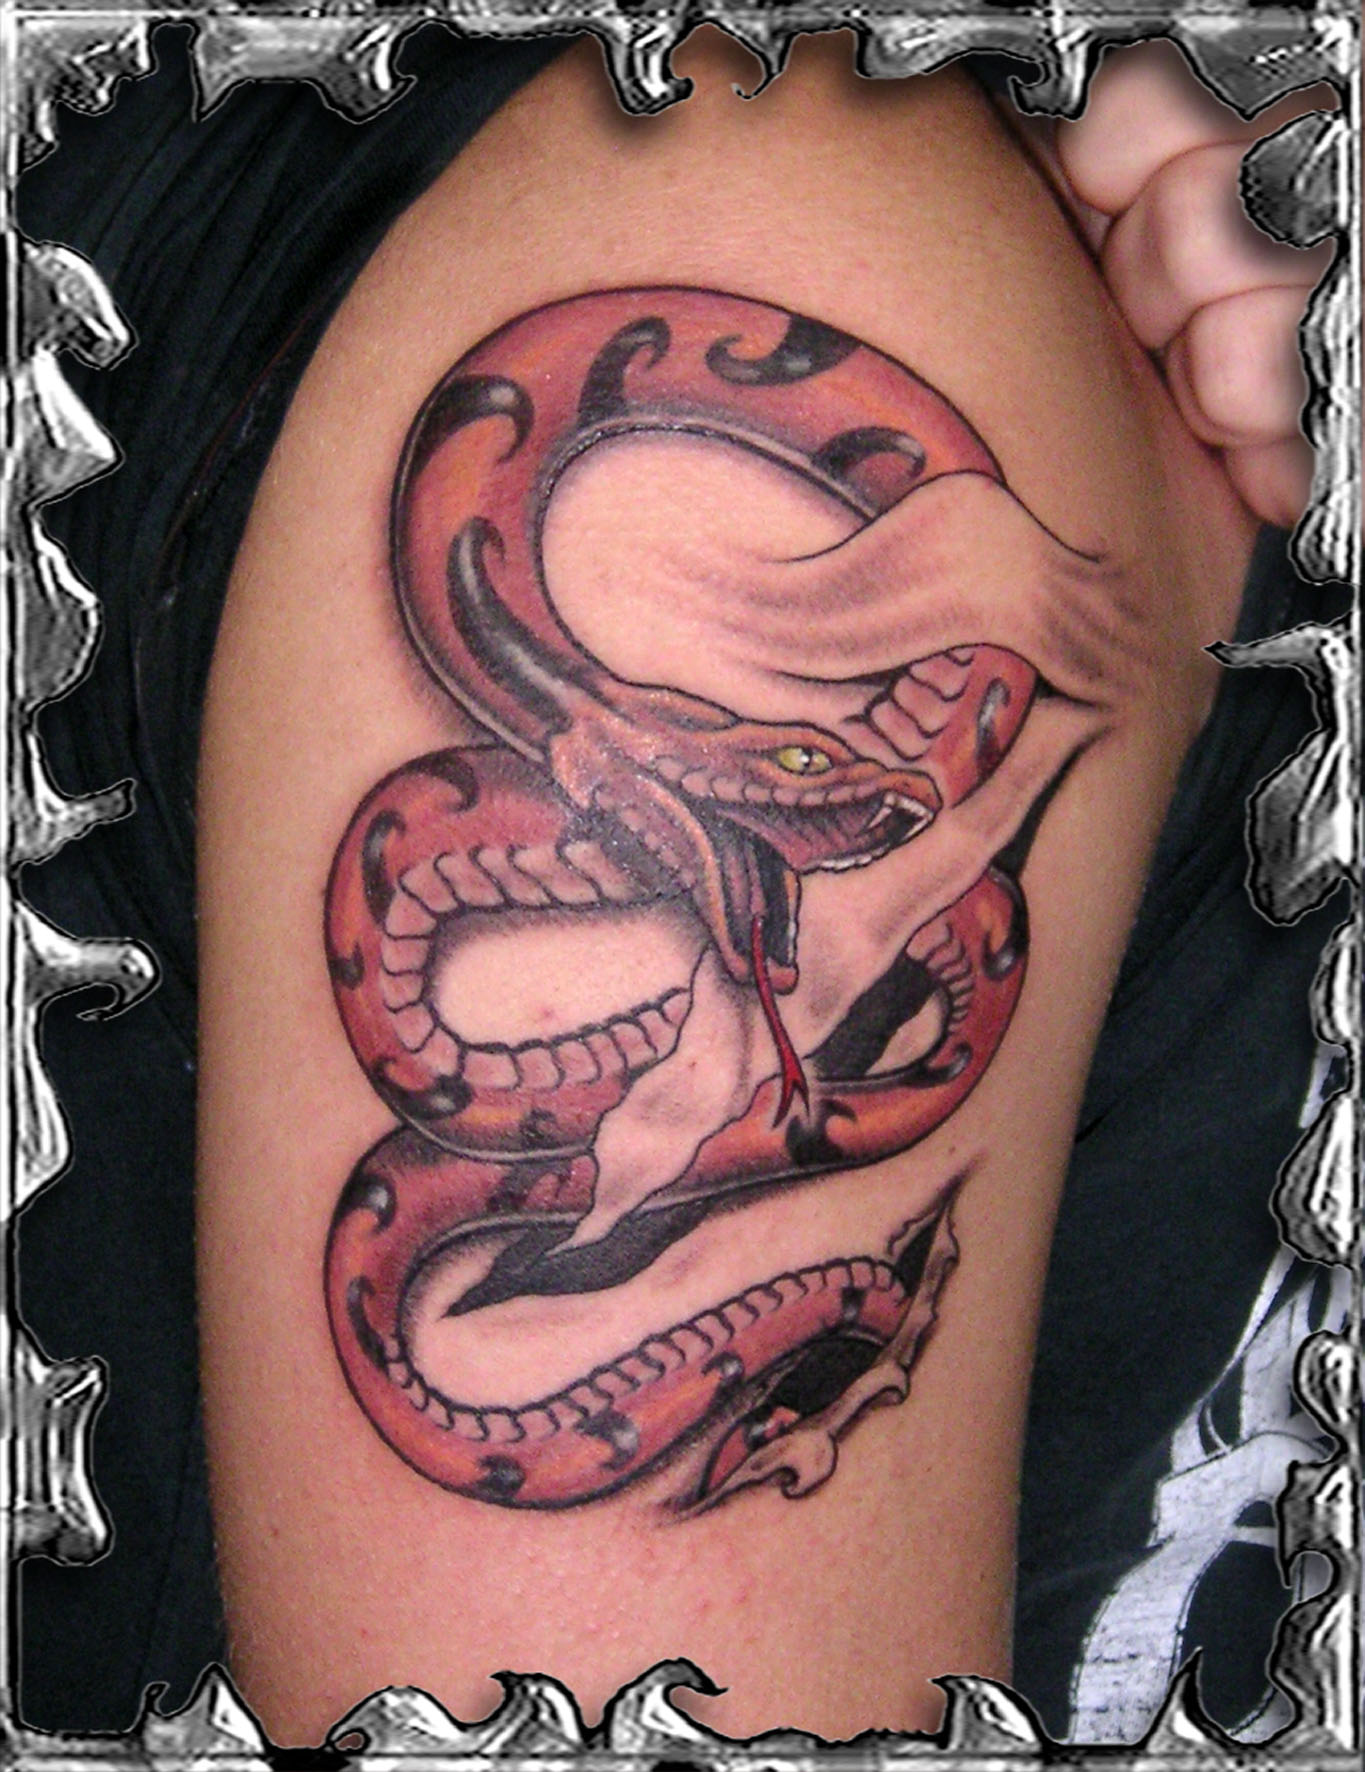 Many snake tattoo designs